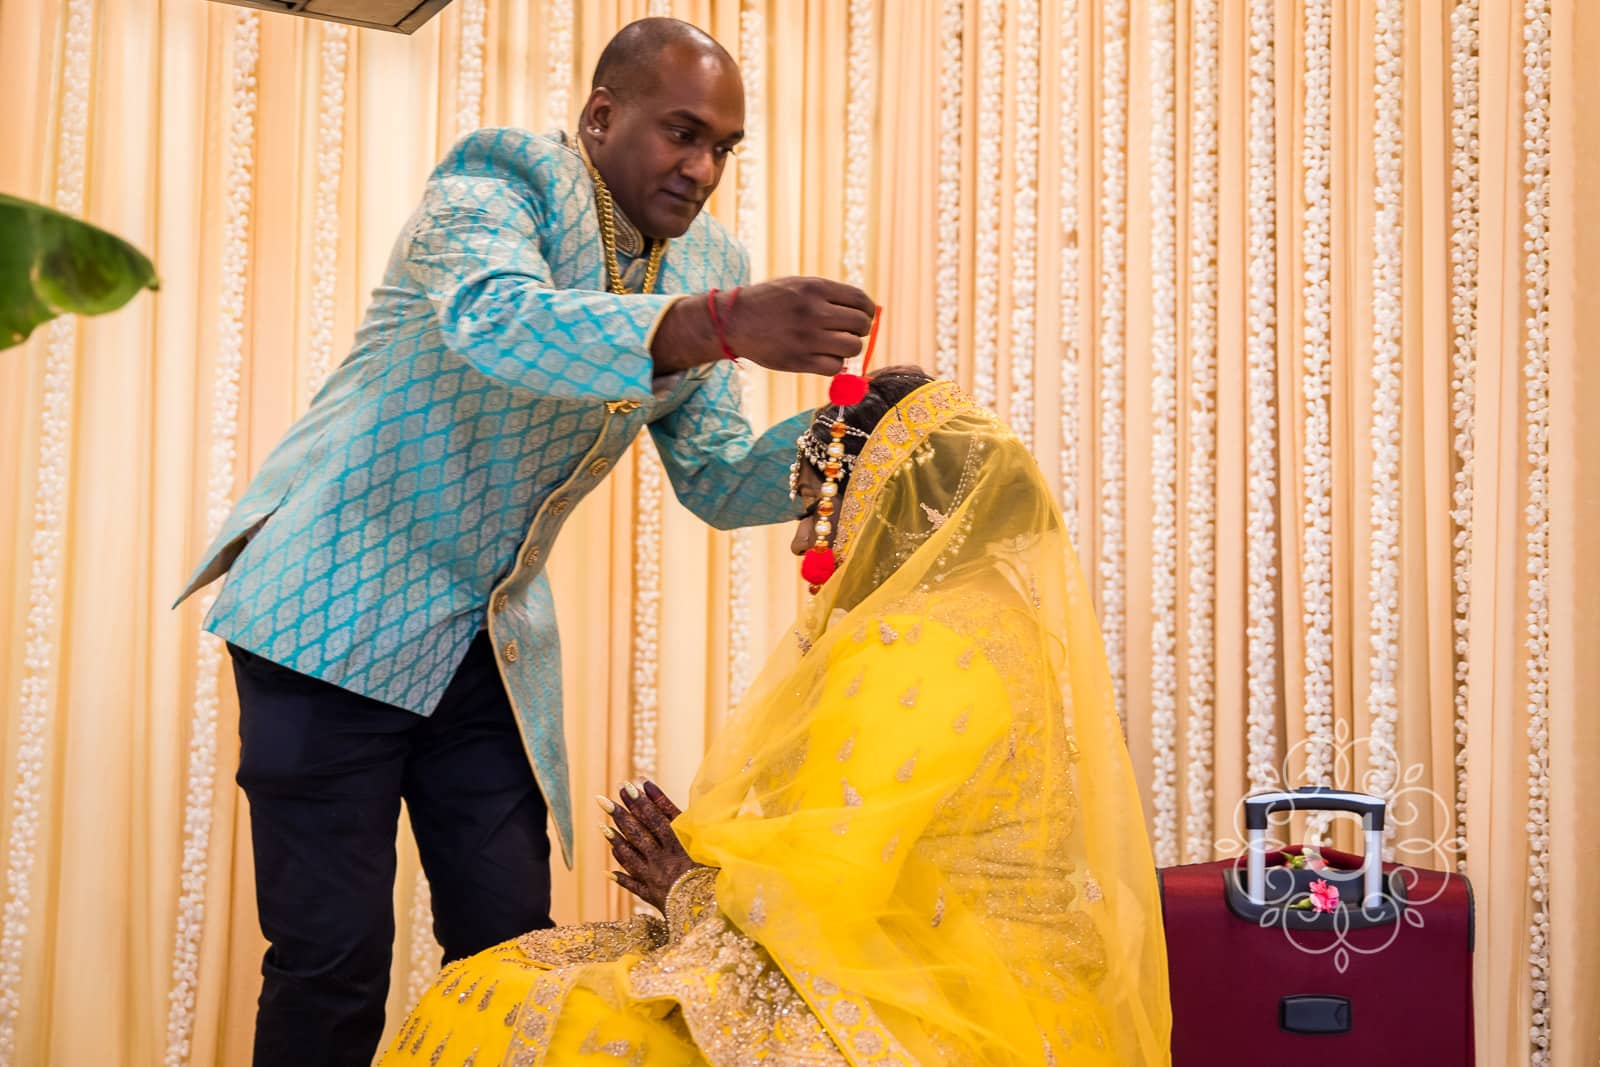 Indian Wedding Vishnu Mandir Photography